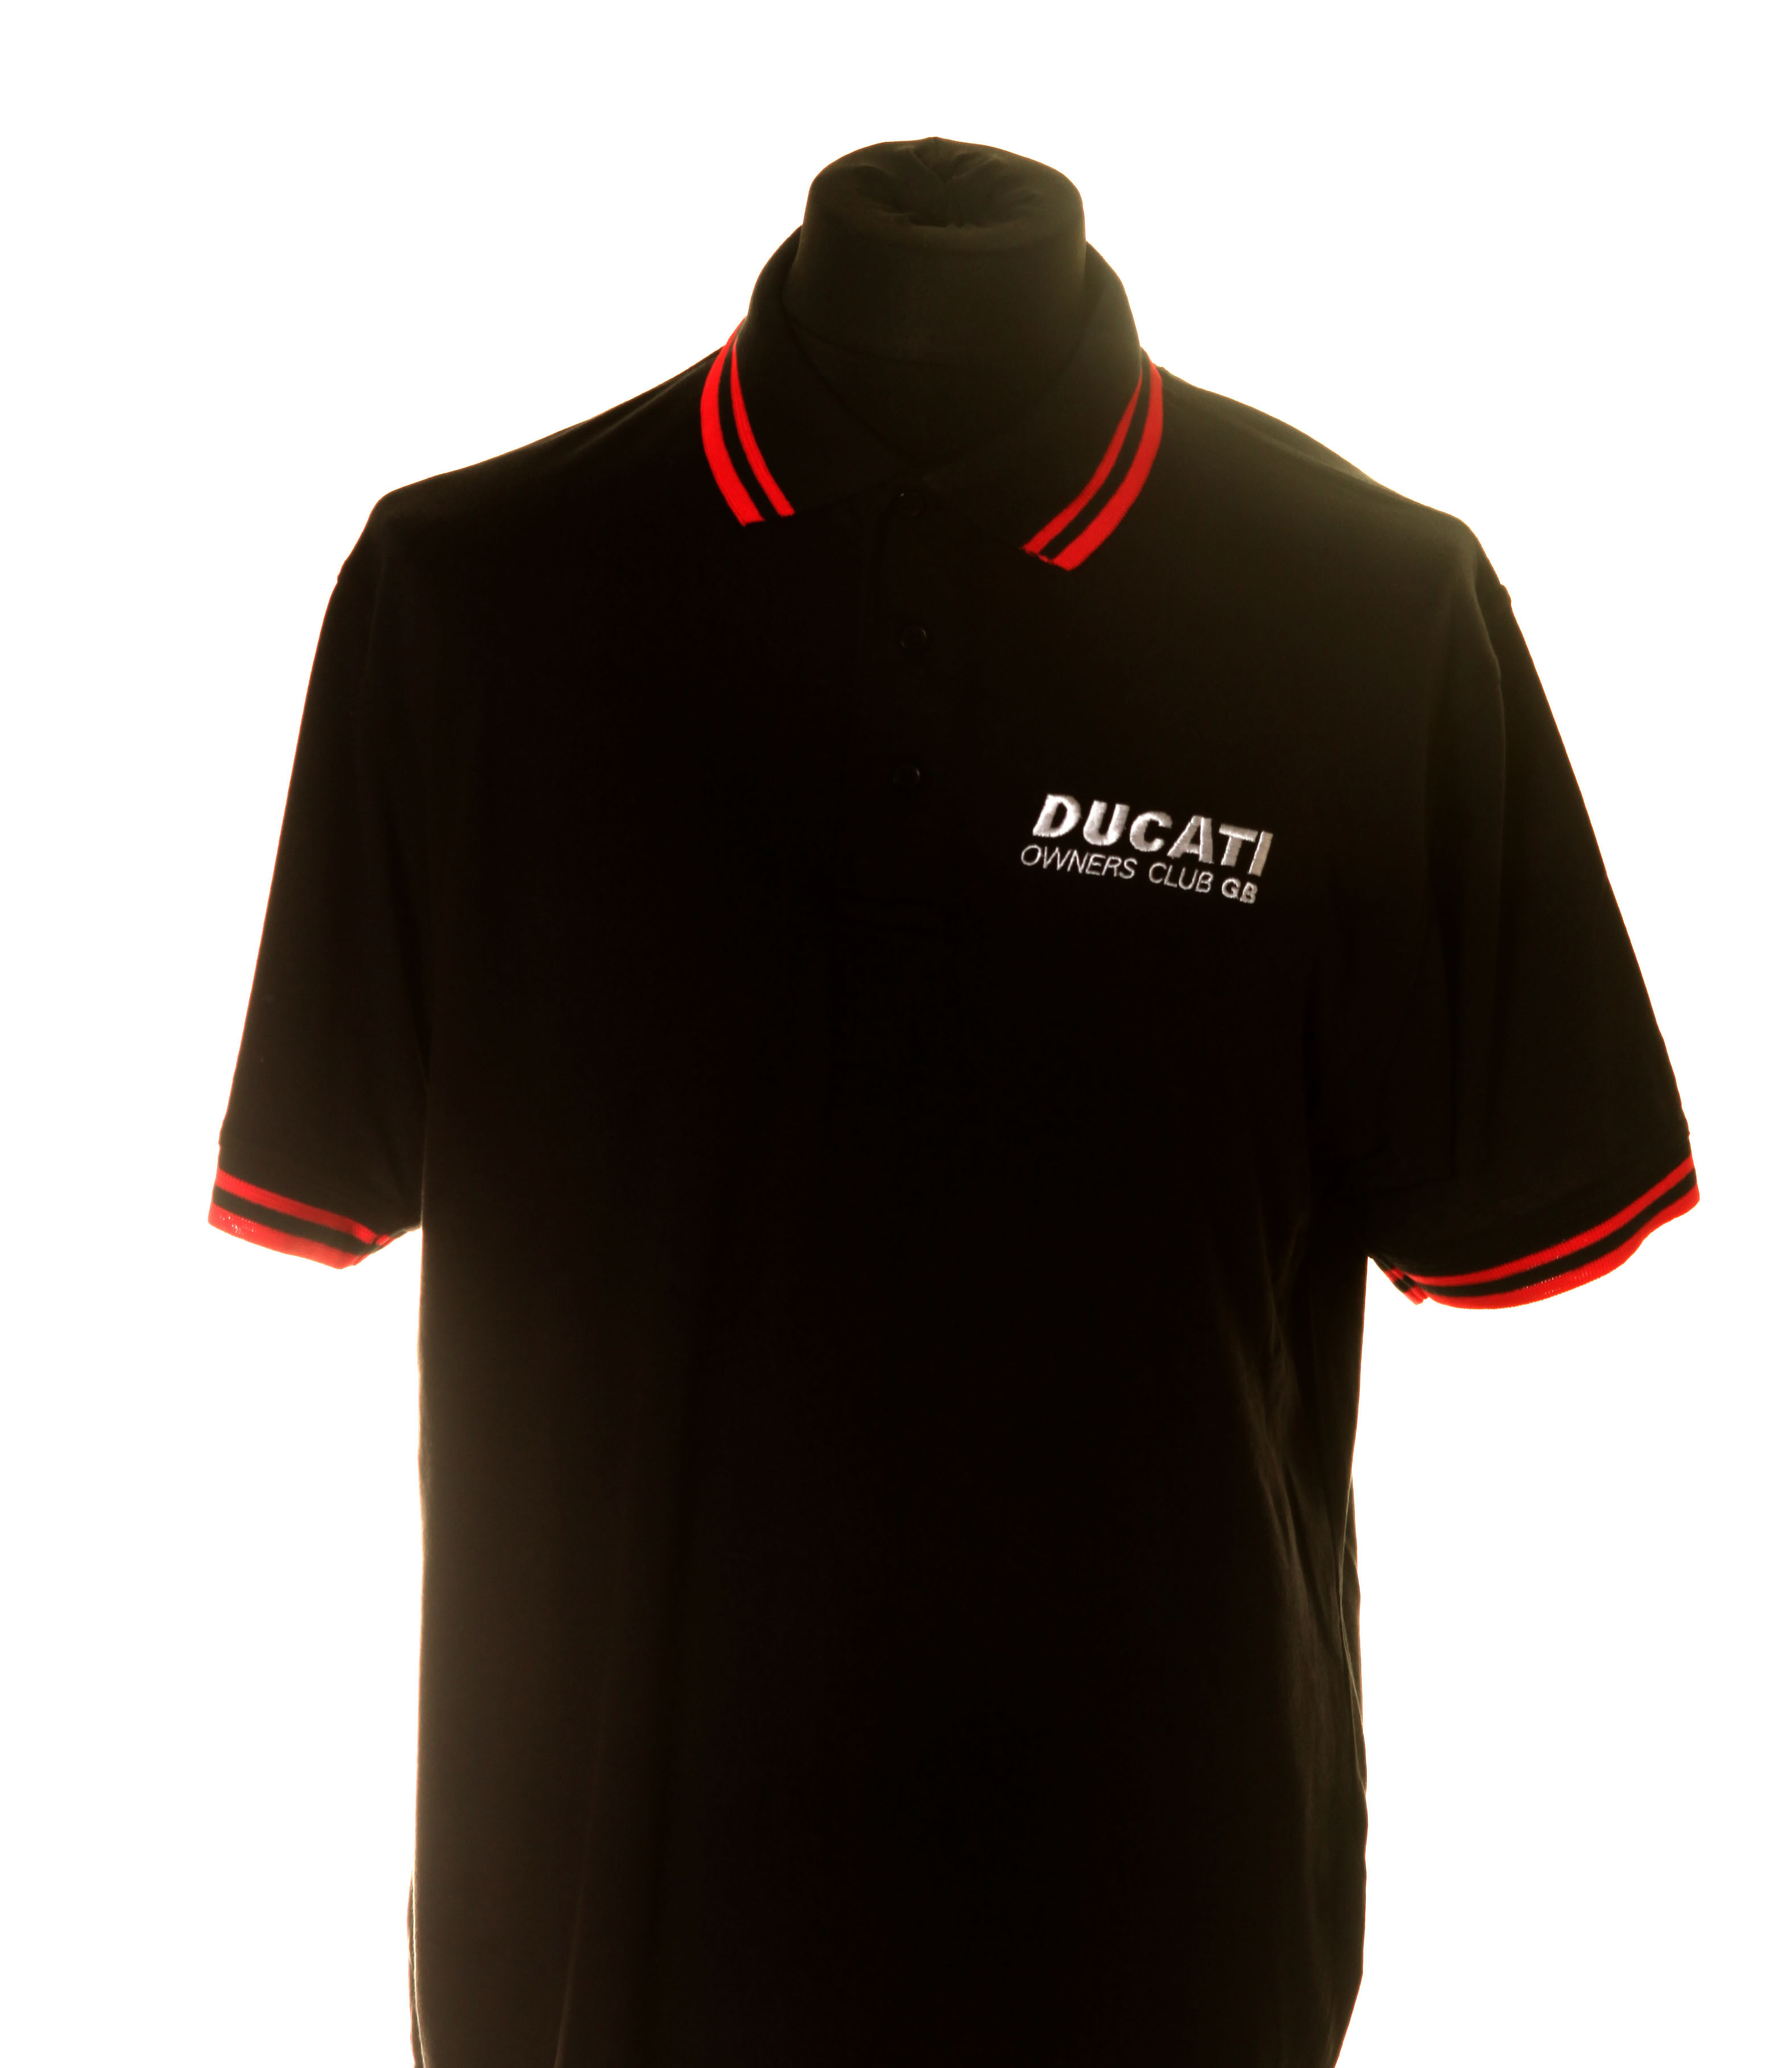 DOC GB Black/Red Adult Polo Shirt